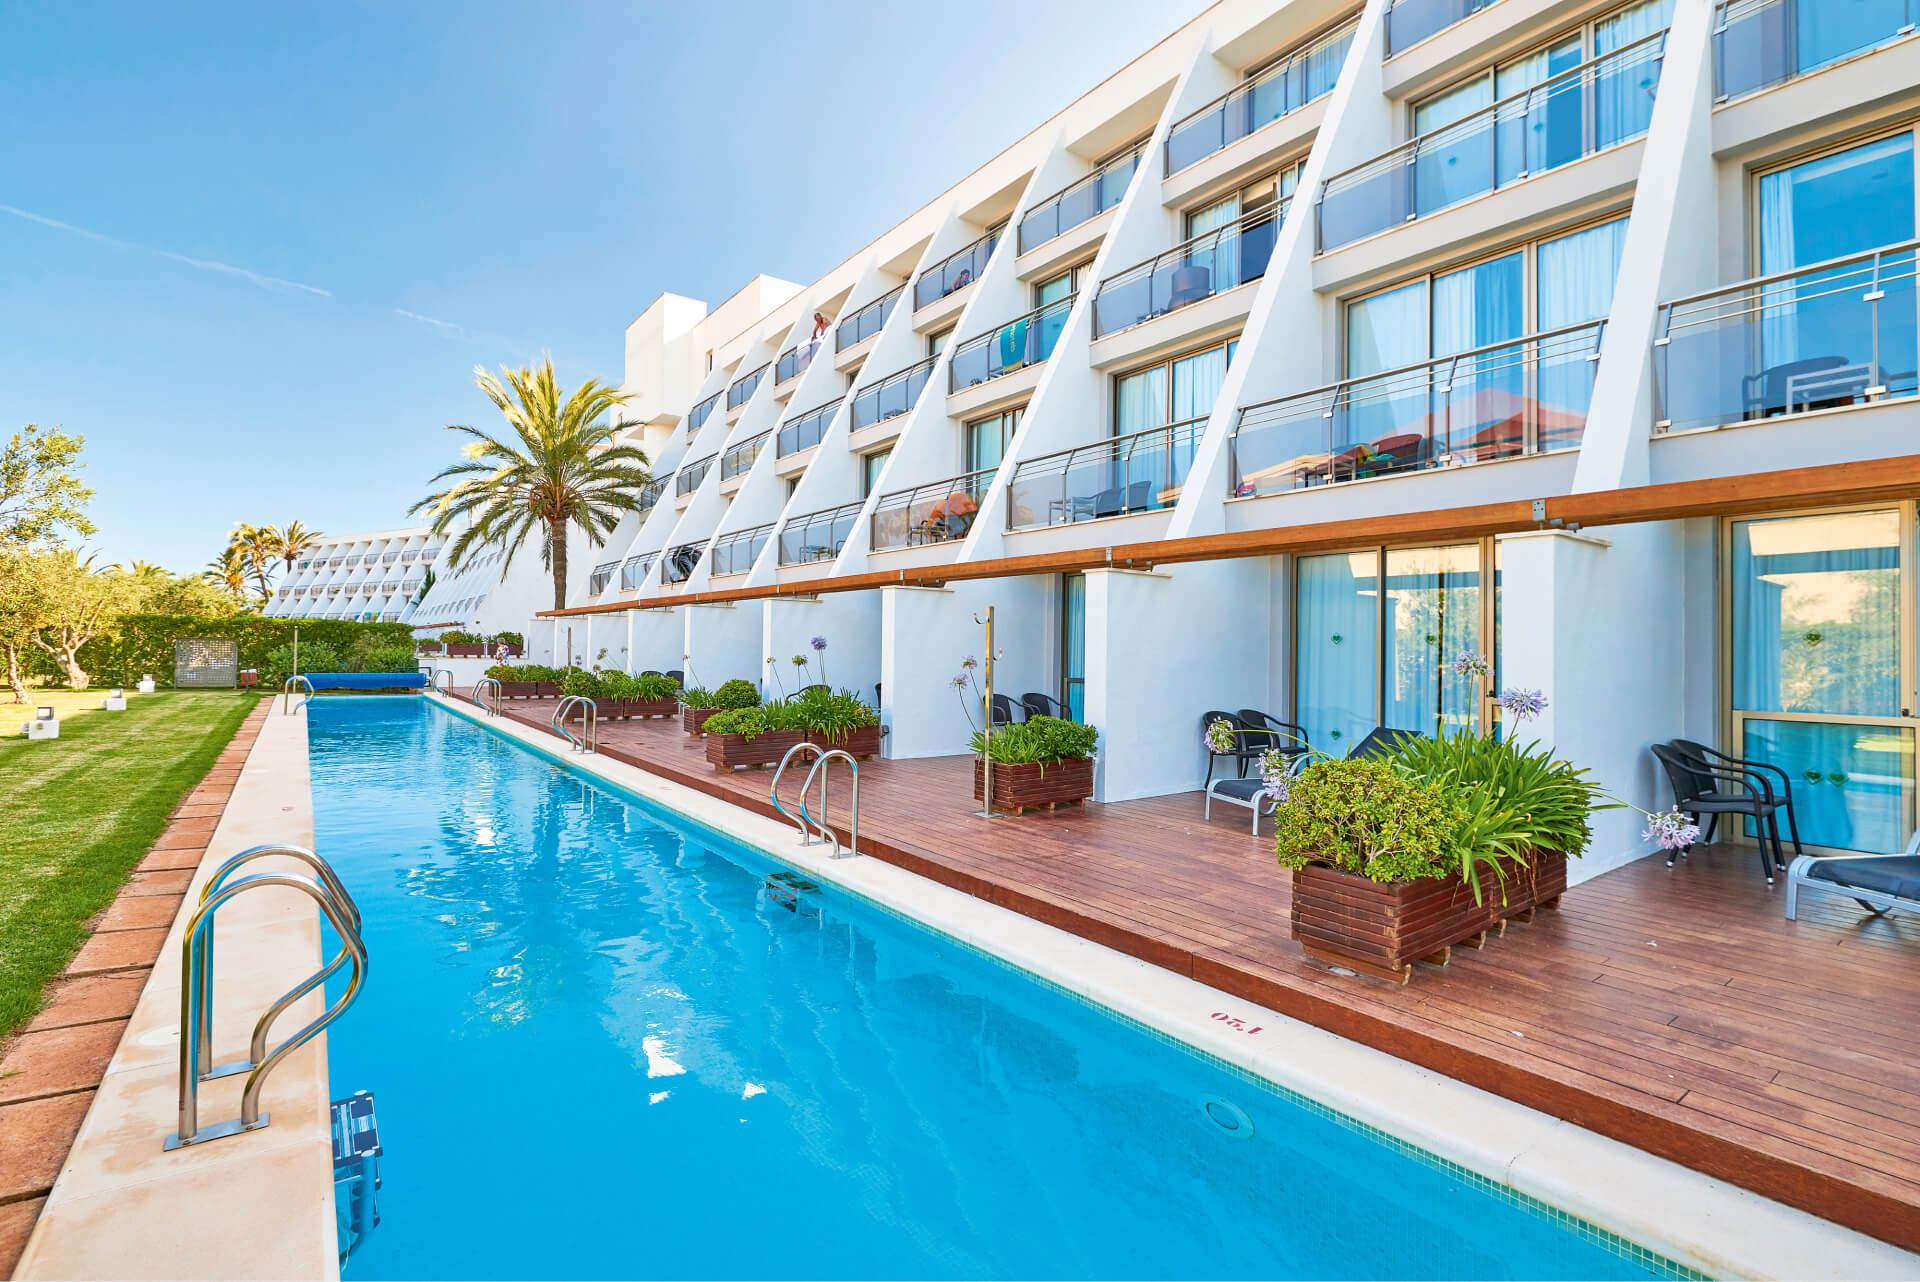 Protur Sa Coma Playa Hotel and Spa, Majorca | Holiday Hypermarket